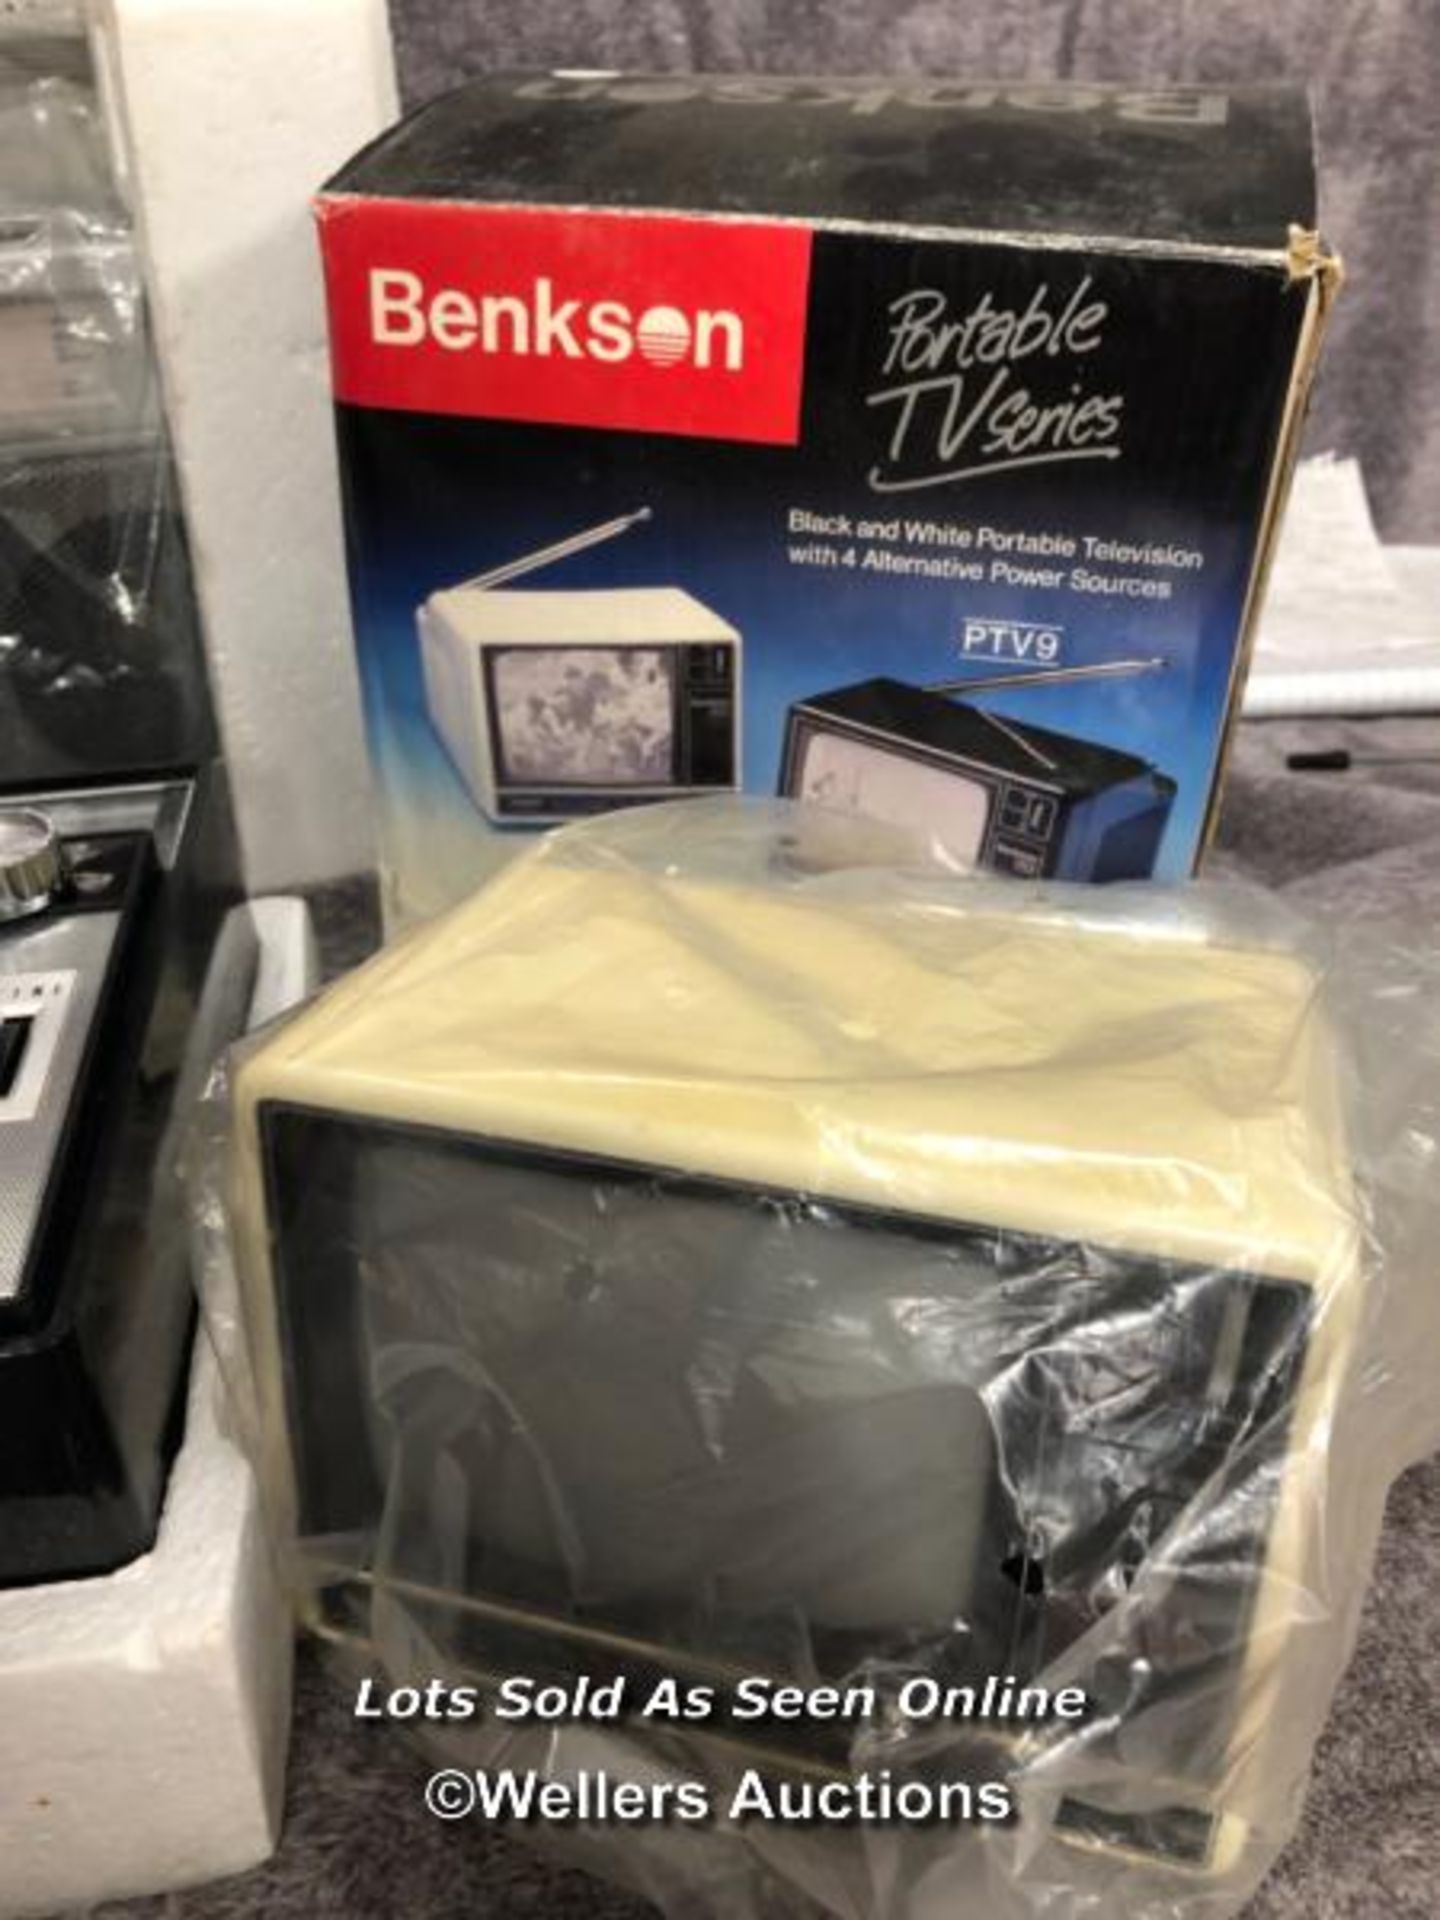 Benkson stereo radio cassette recorder, transistor radio and PTV9 black and white portable - Image 3 of 4